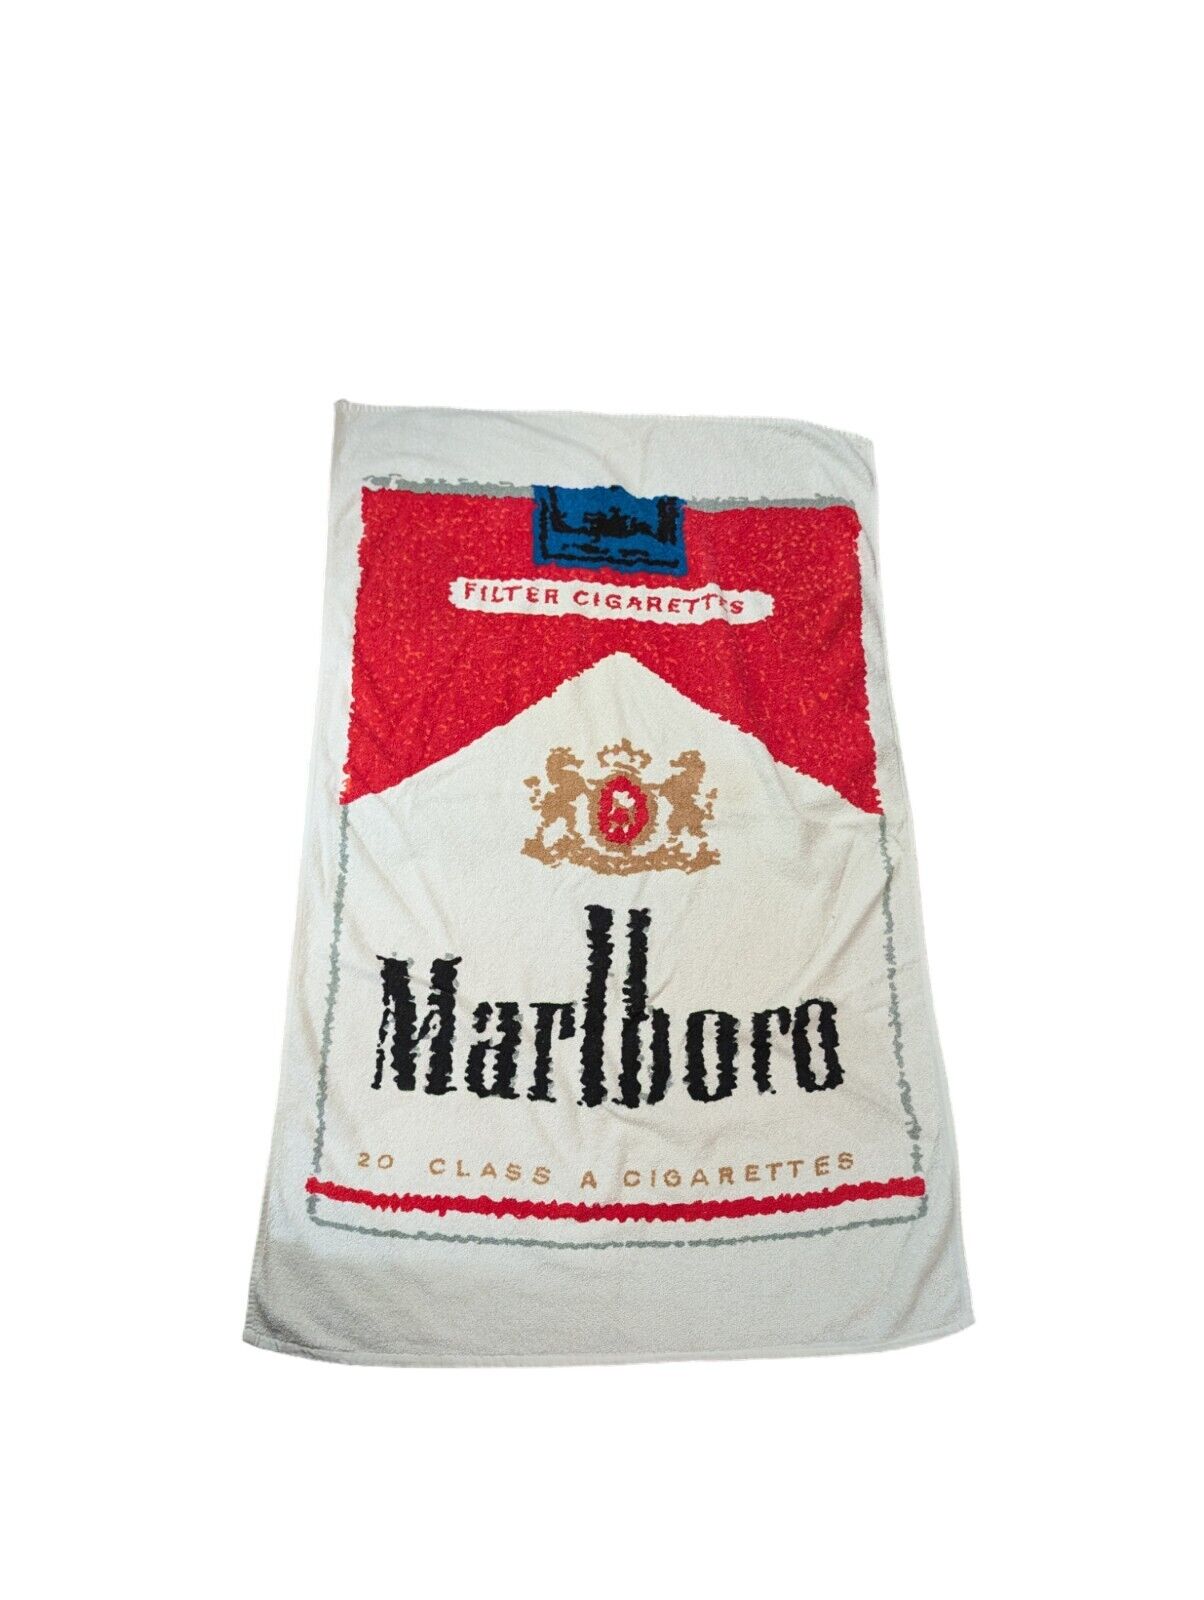 Vintage 1970s Marlboro Man Cigarettes Large White Beach Bath Towel, Rare